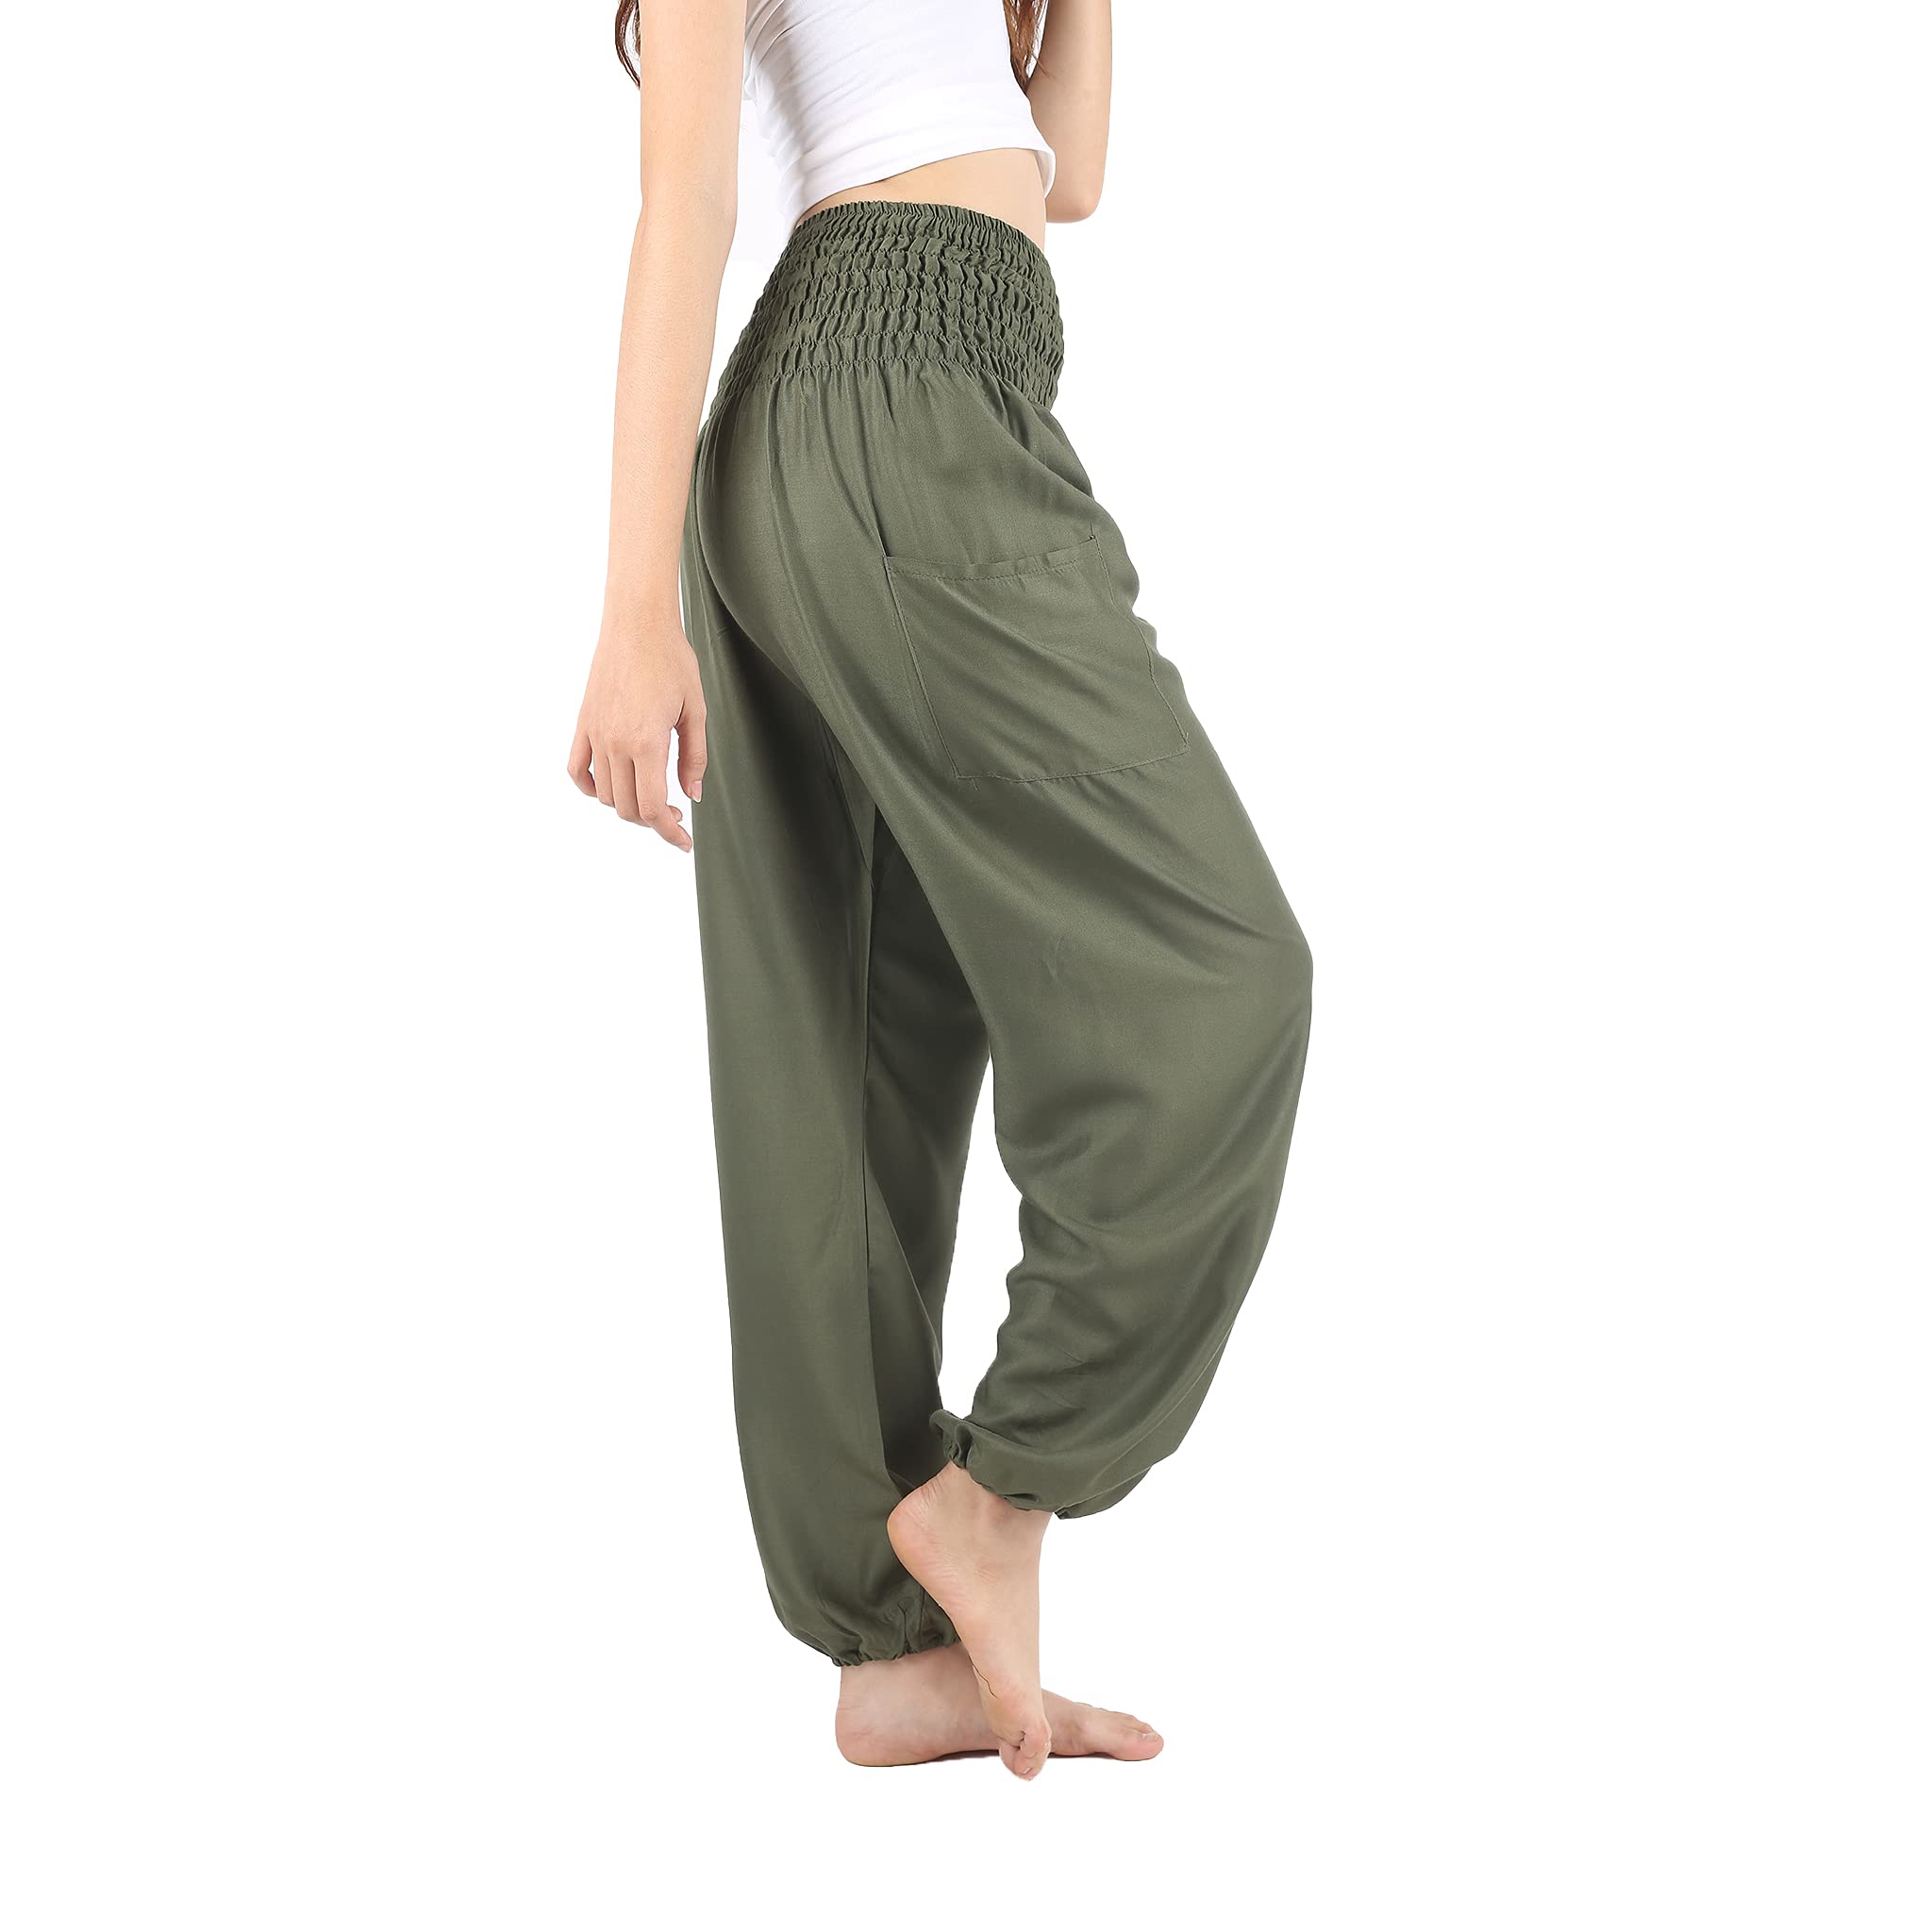 Summer Harem Pants - Women's Pants Online - Mariposa Clothing NZ - Mariposa